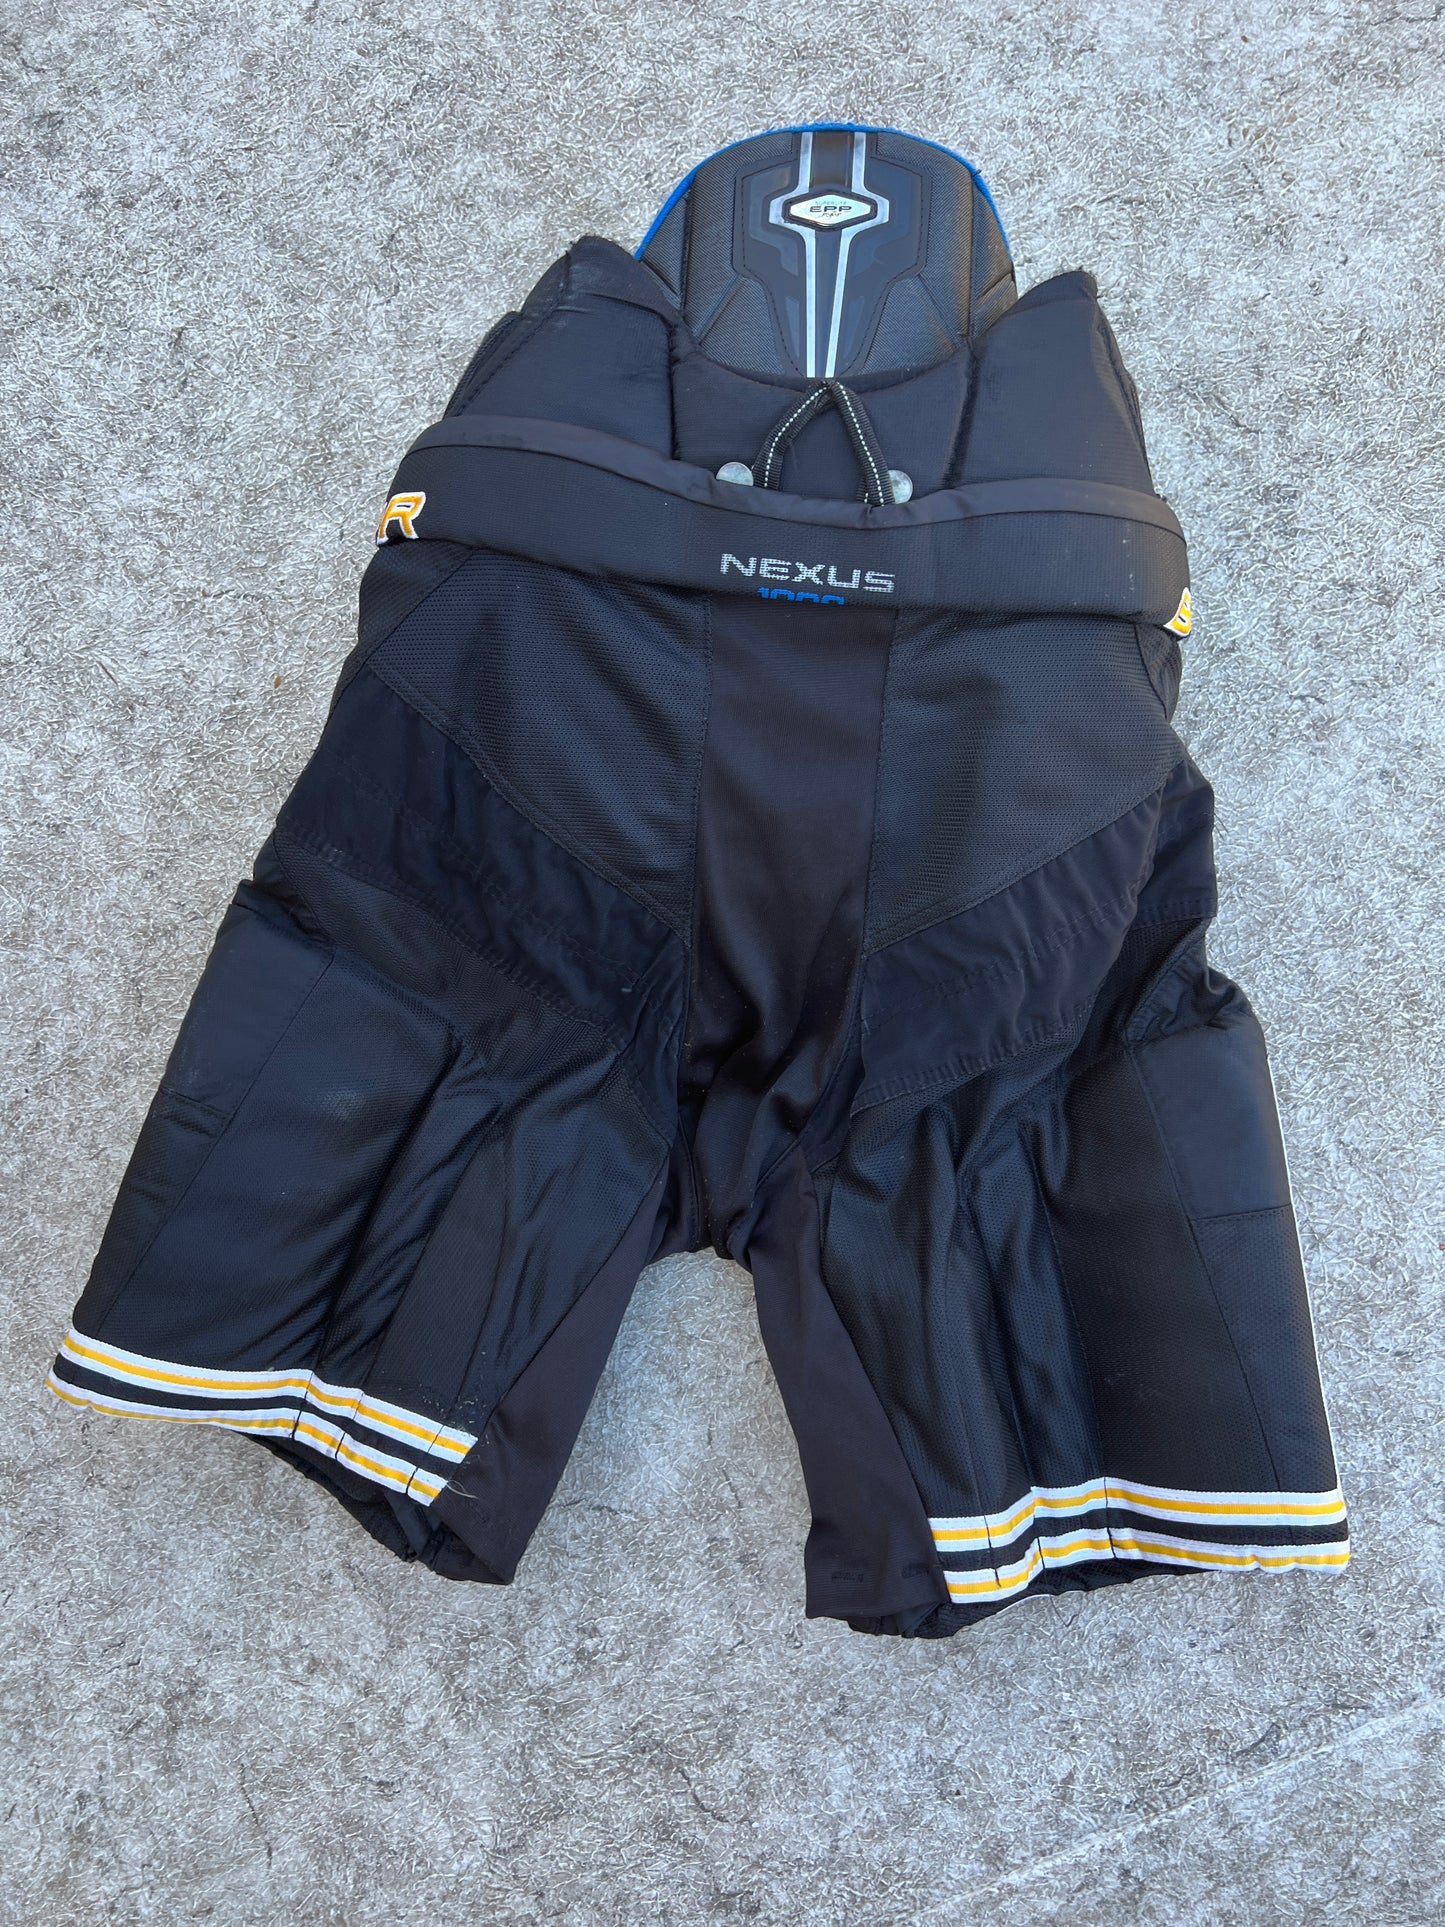 Hockey Goalie Pants Child Size Junior X-Large Nexus 1000 Custom Pro Stock Rare Outstanding Quality